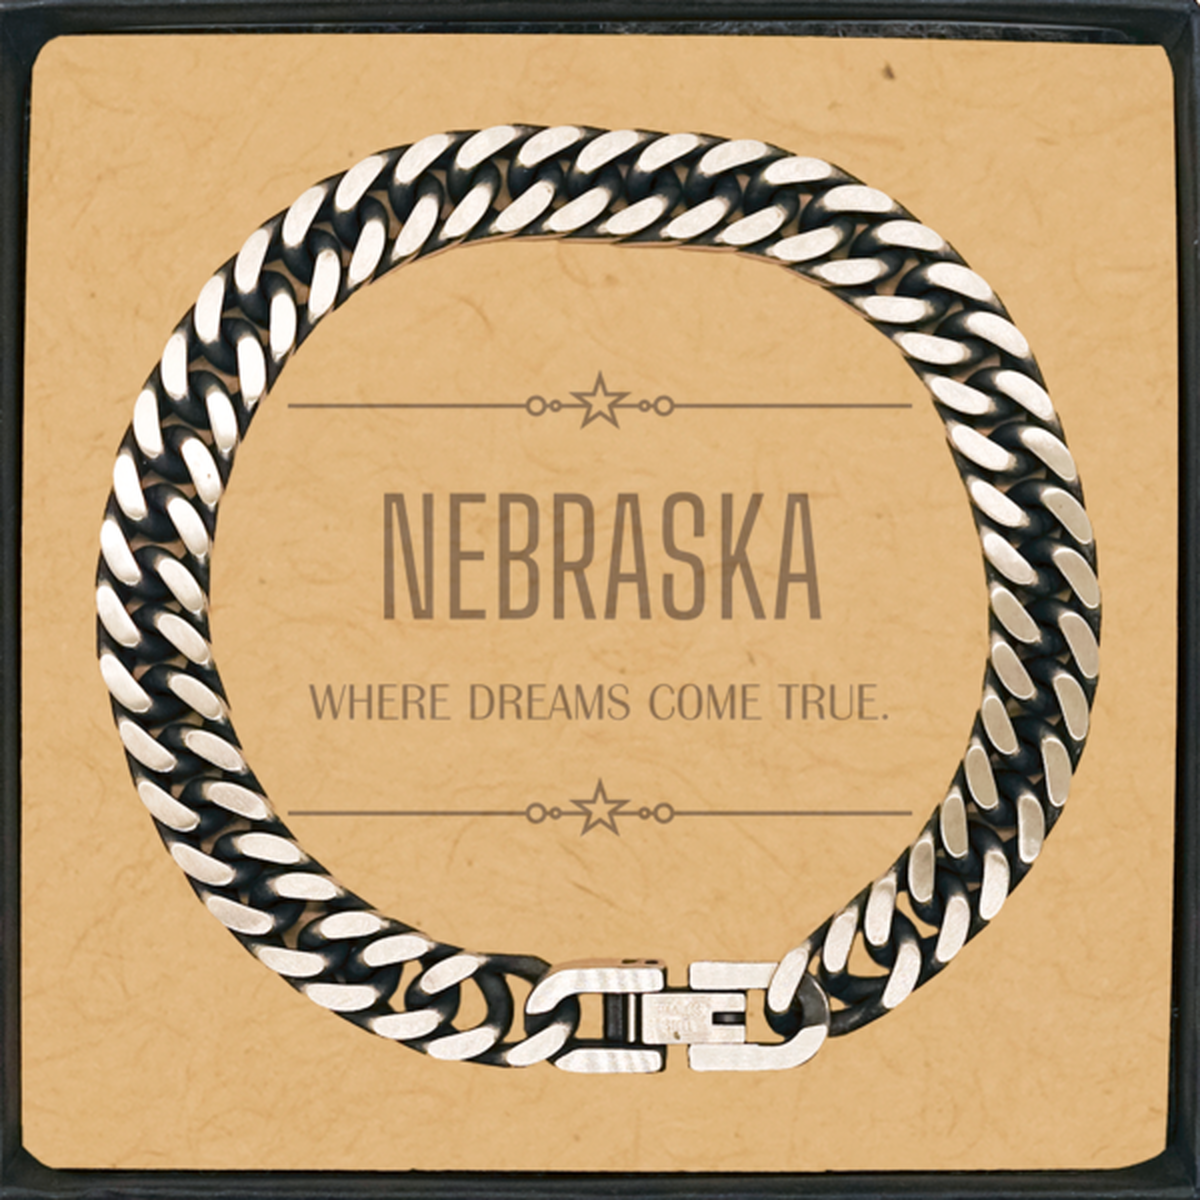 Love Nebraska State Cuban Link Chain Bracelet, Nebraska Where dreams come true, Birthday Inspirational Gifts For Nebraska Men, Women, Friends